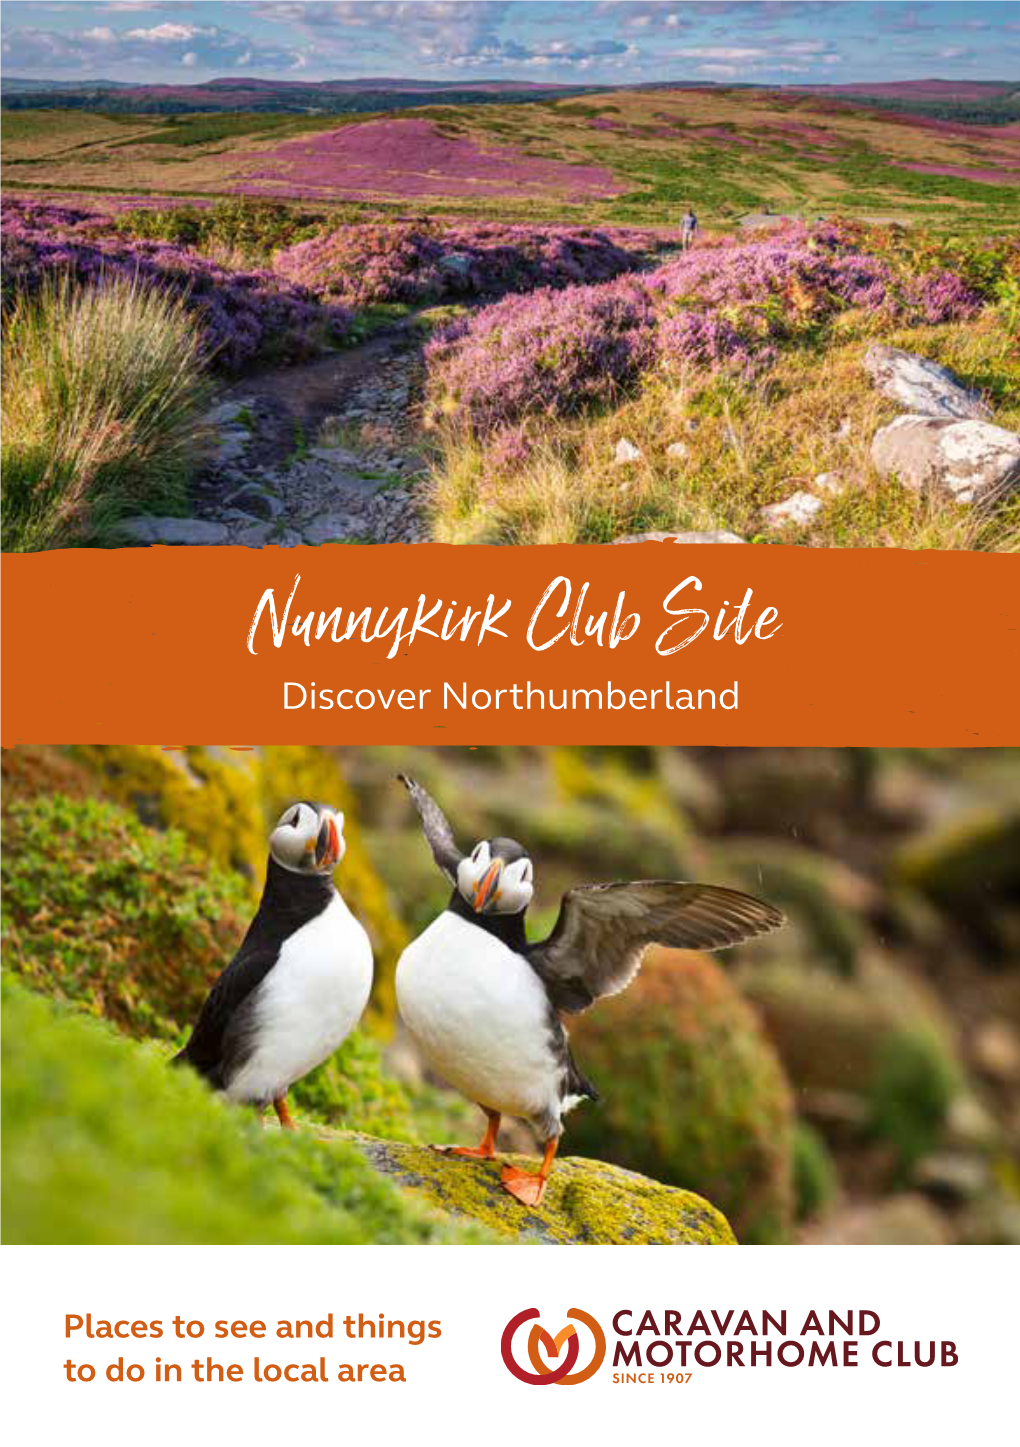 Nunnykirk Club Site Discover Northumberland